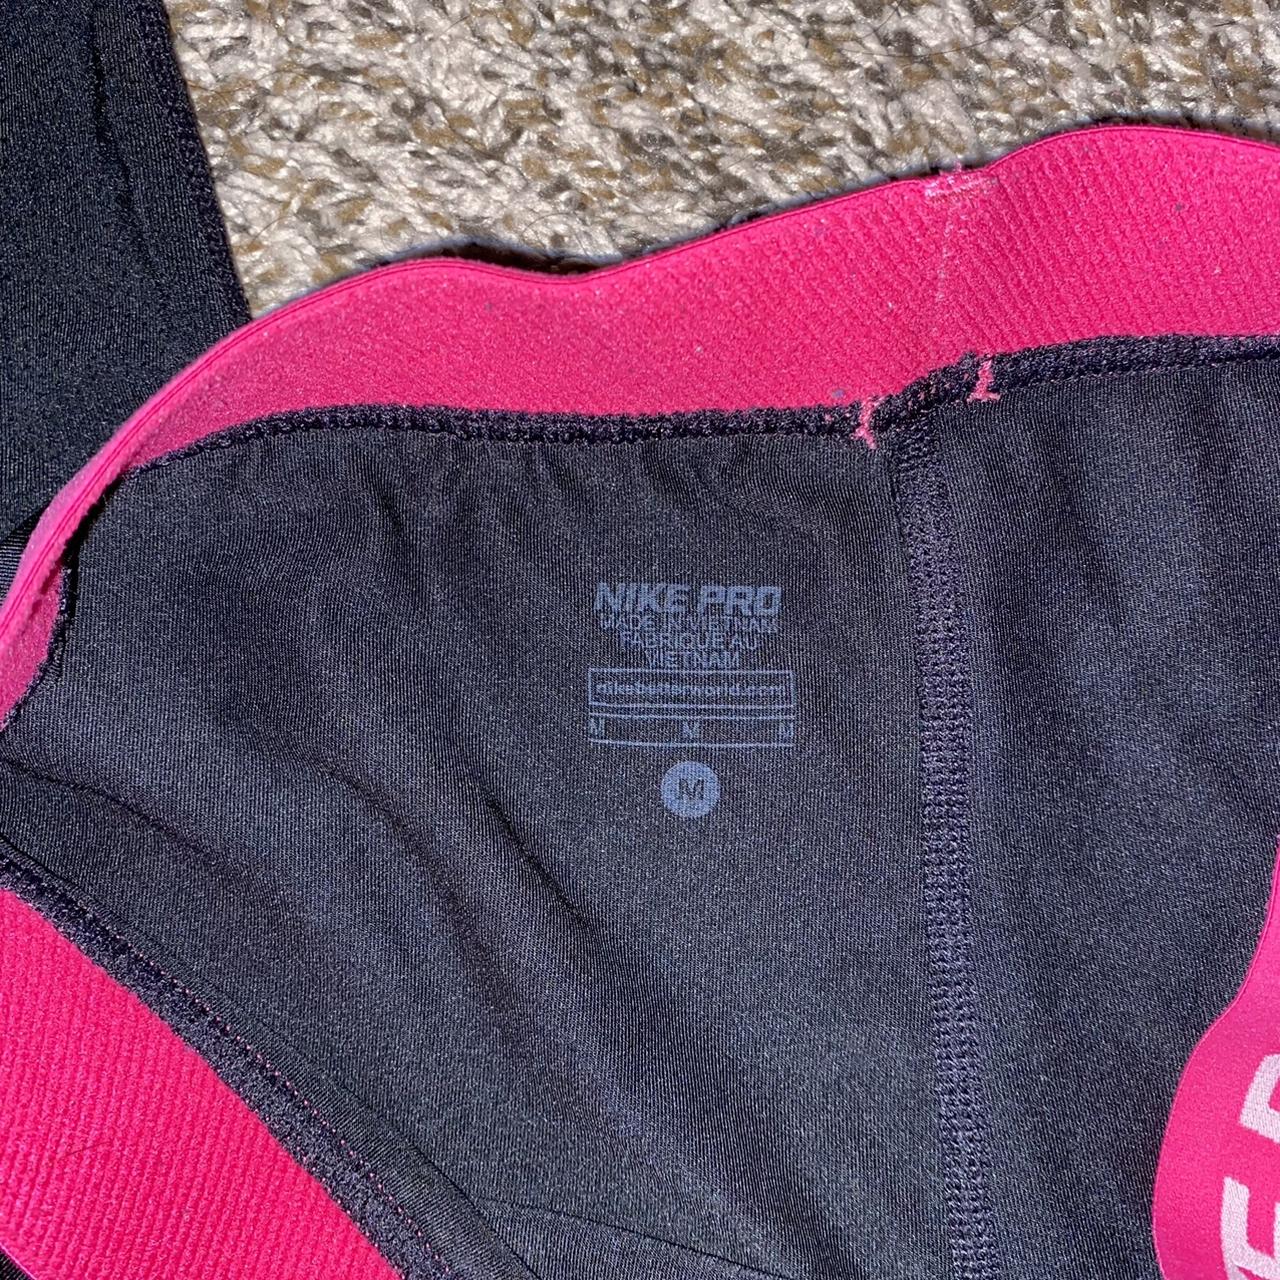 Nike Pro capri length leggings size: medium open to - Depop